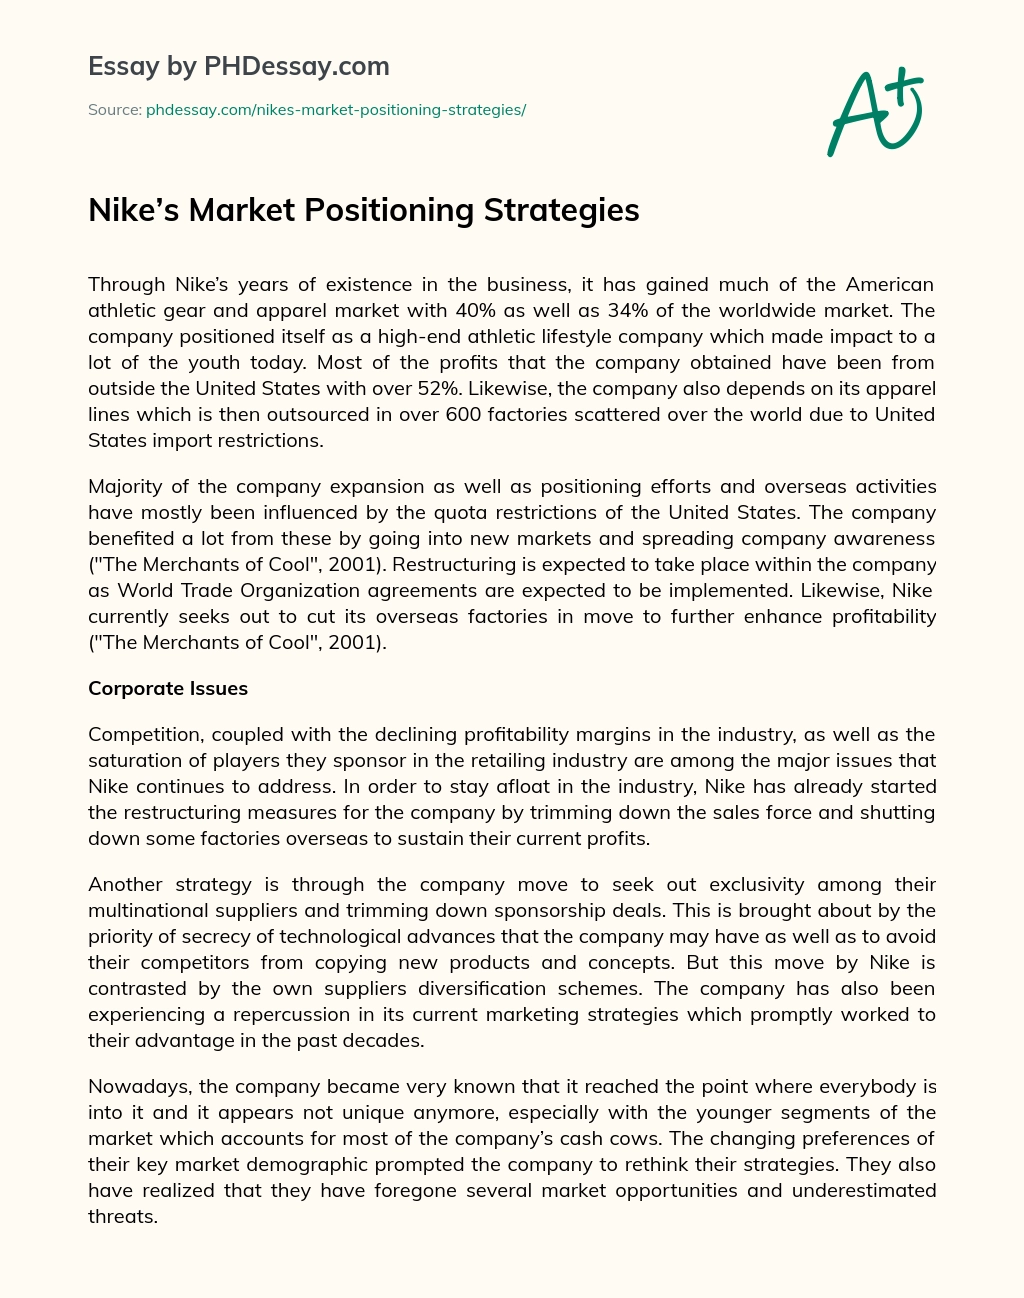 Nike’s Market Positioning Strategies essay